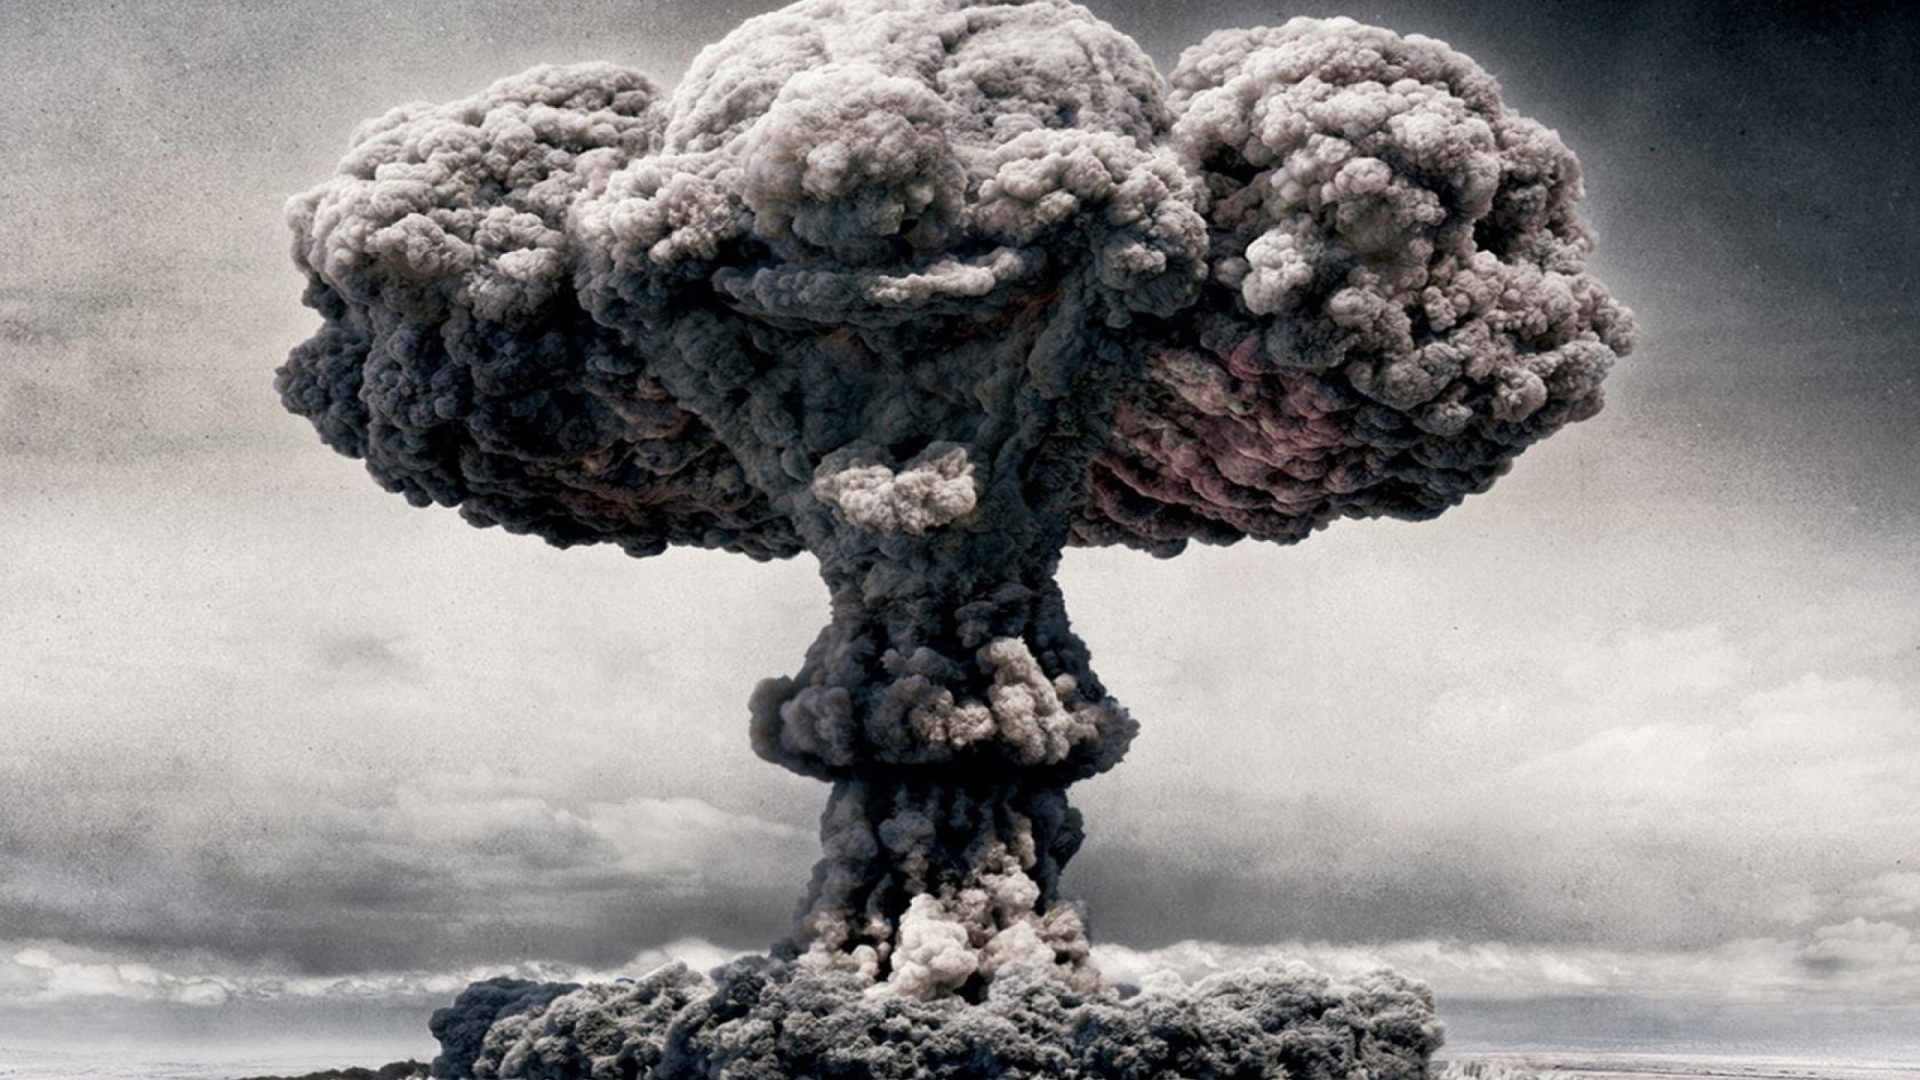 Mushroom Cloud Nuclear Explosion